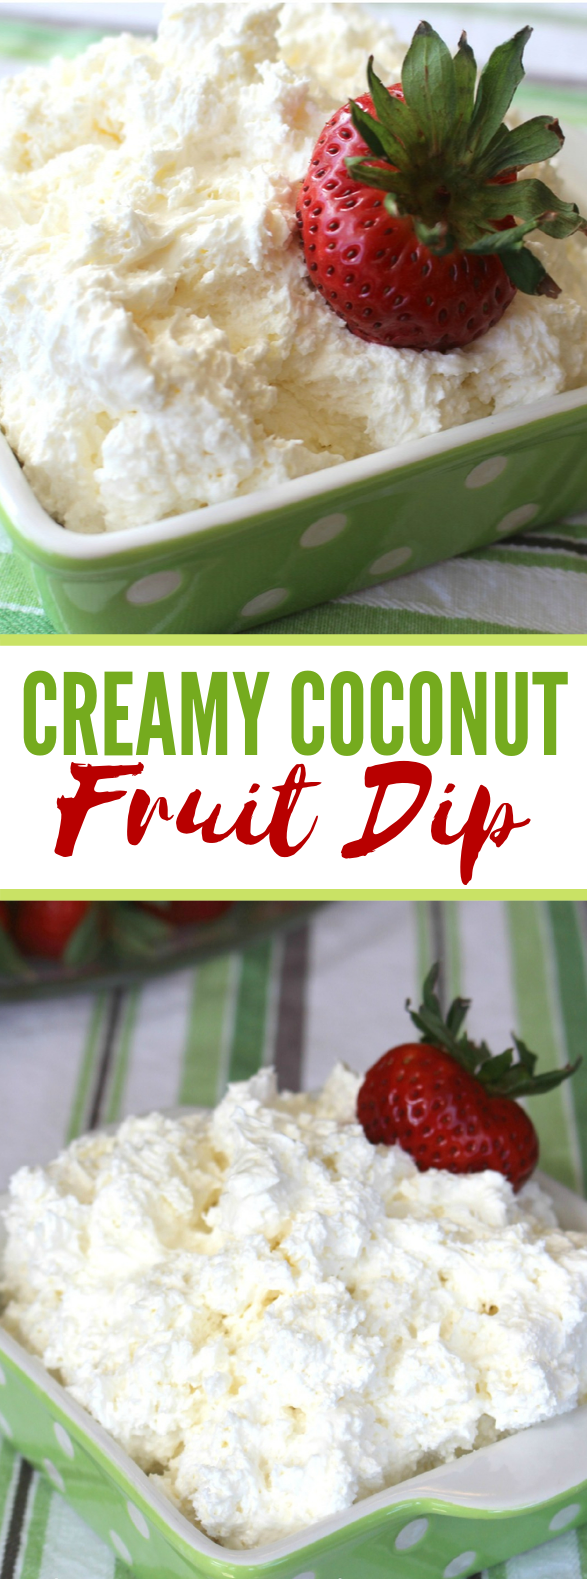 CREAMY COCONUT FRUIT DIP #appetizers #meals